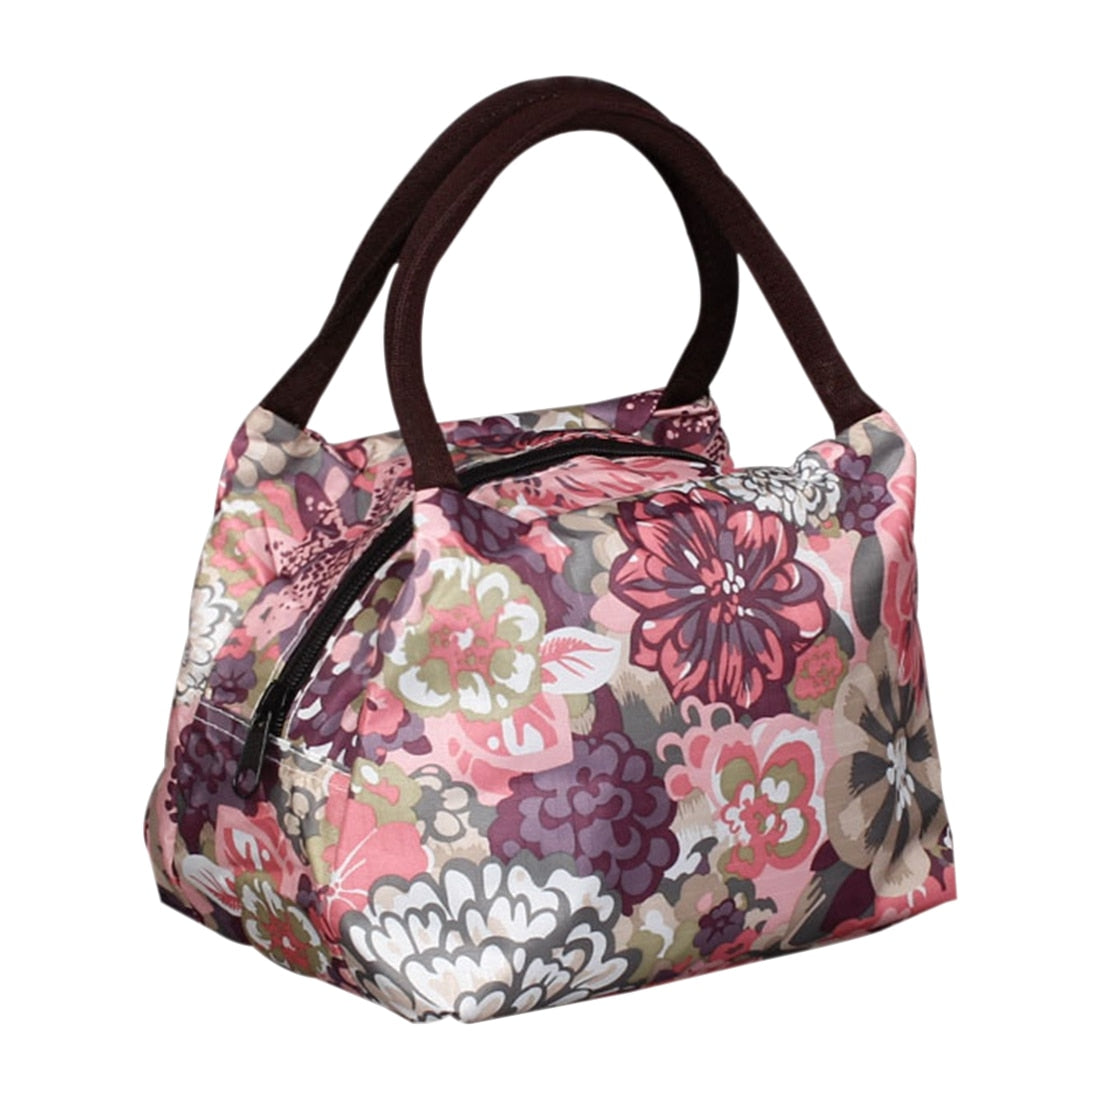 Lady's fashion oxford bag women Handbags lunch shoulder bags for female Messenger Bags(Style 11 Chrysanthemum) - ebowsos